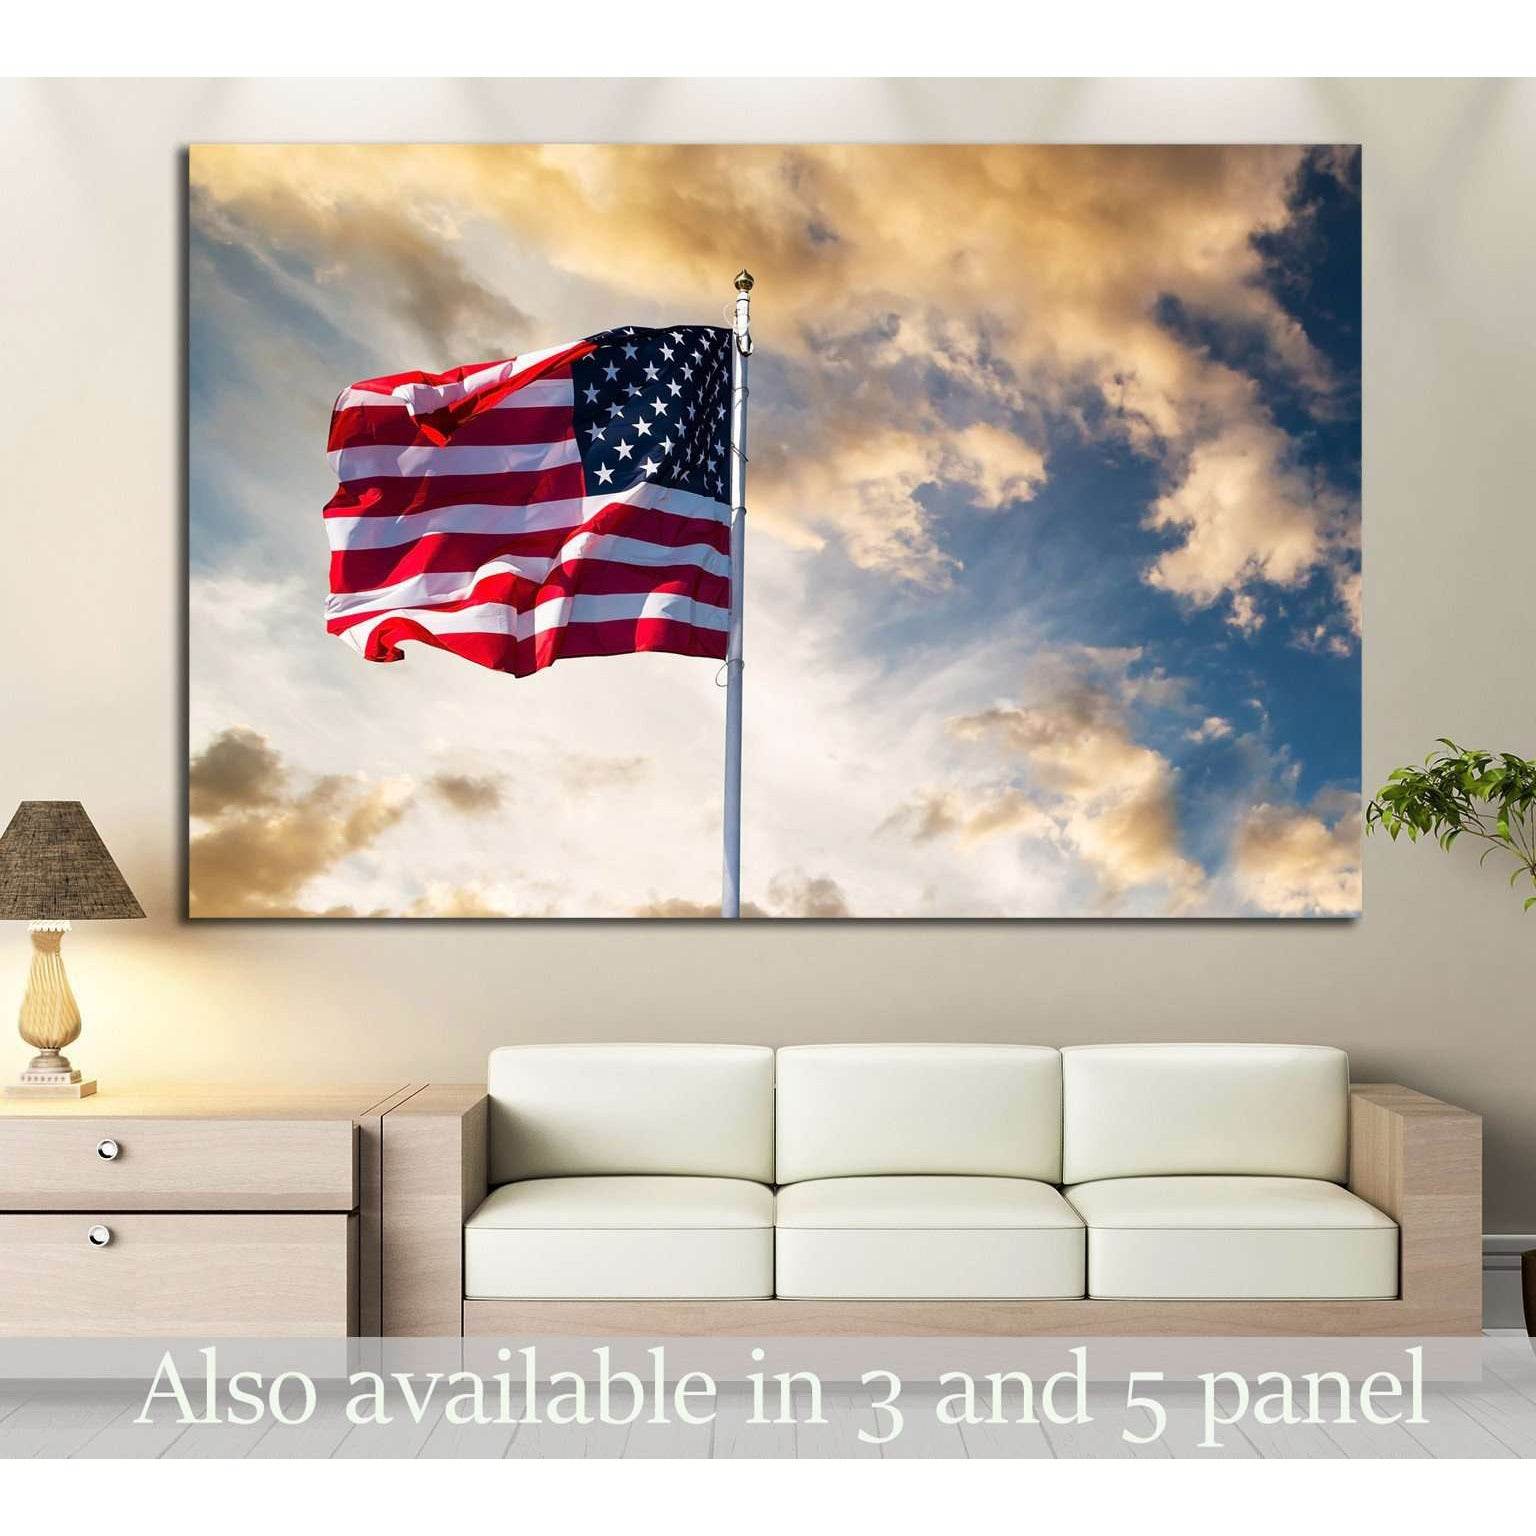 American flag waving №1295 - canvas print wall art by Zellart